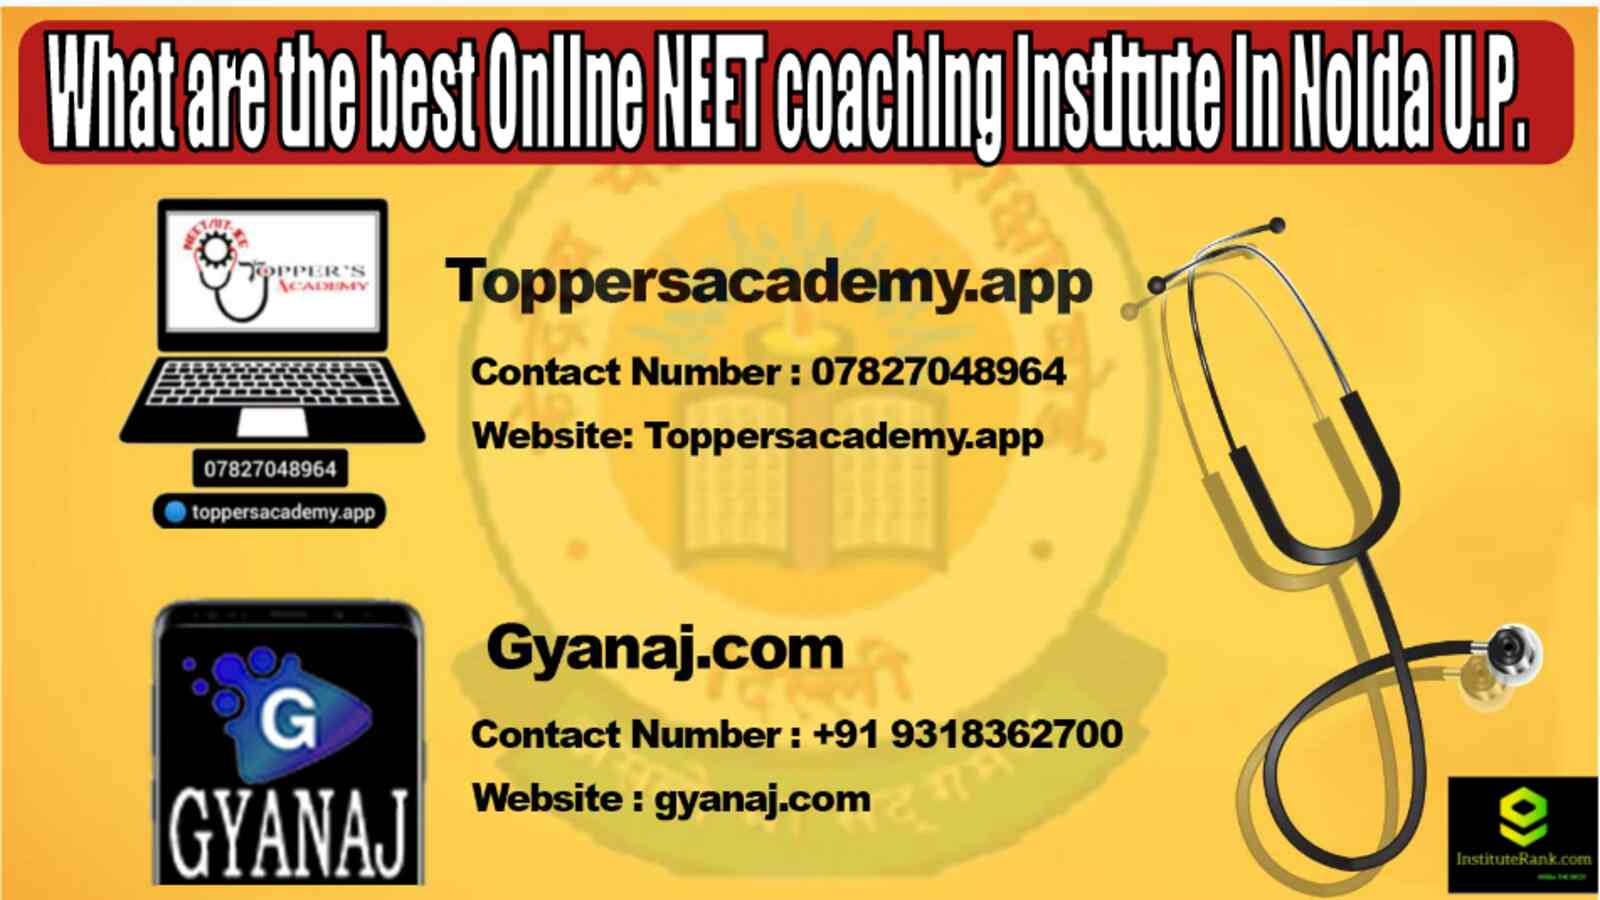 What are the best Online NEET coaching institute in Noida U.P. 2022